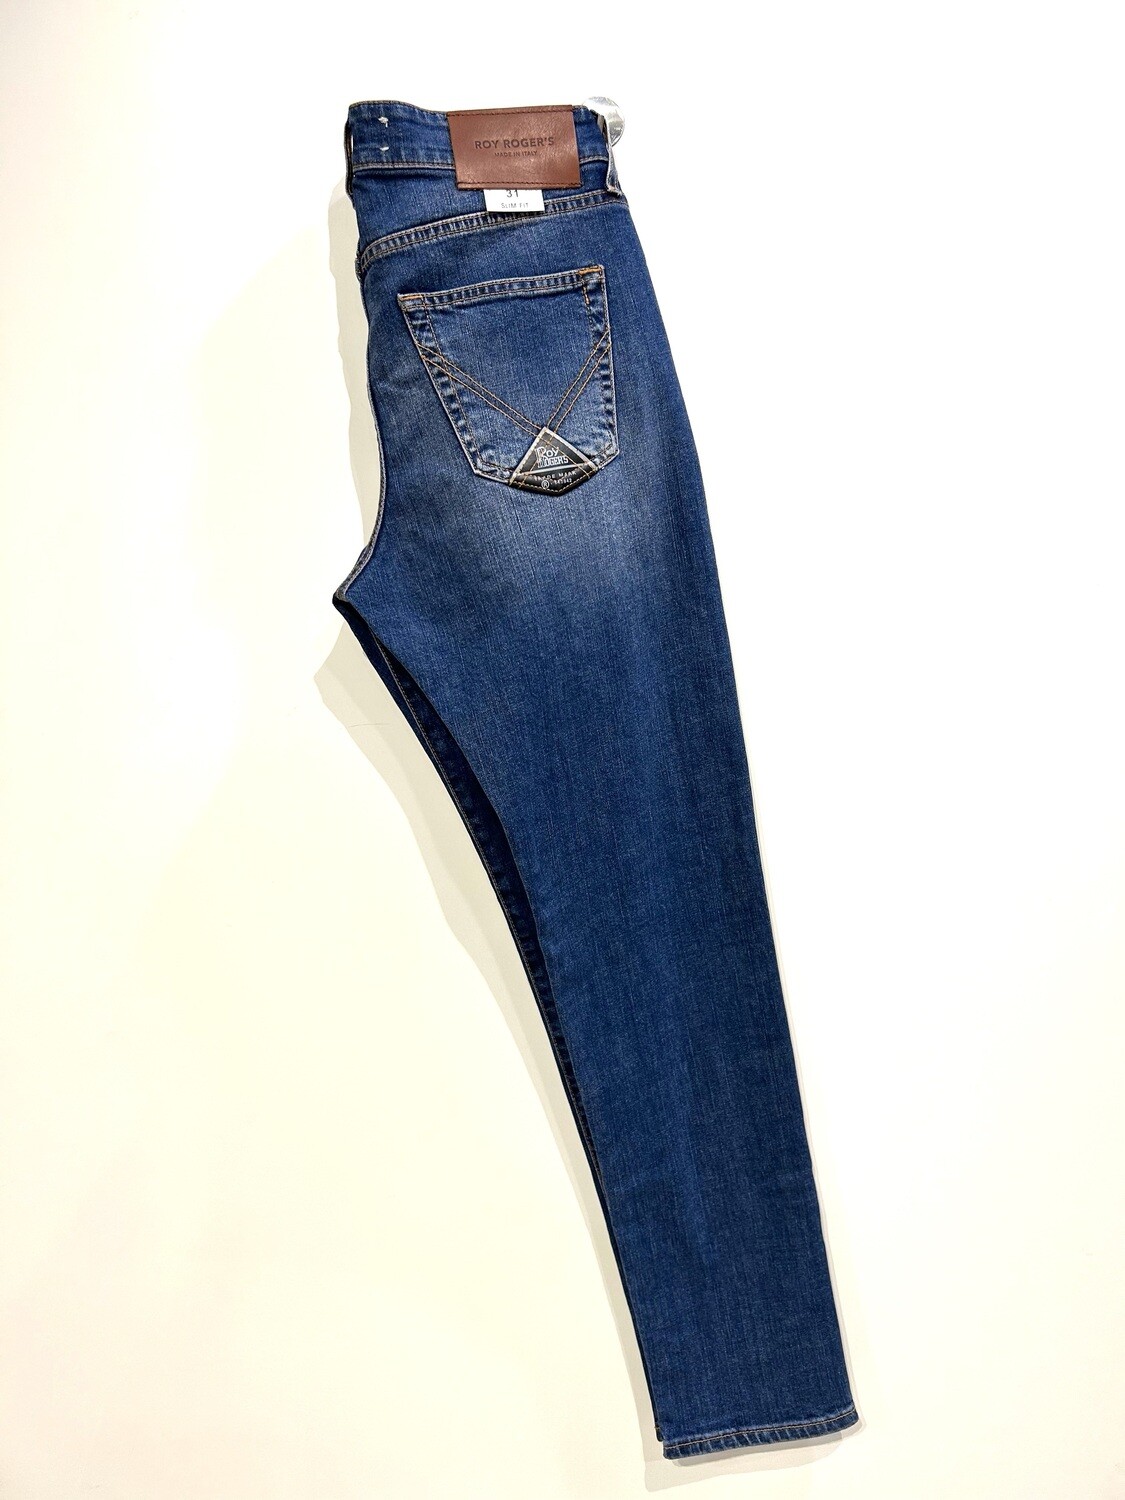 Jeans 5 tasche strech, slim fit, washed. Col. Bleu medio